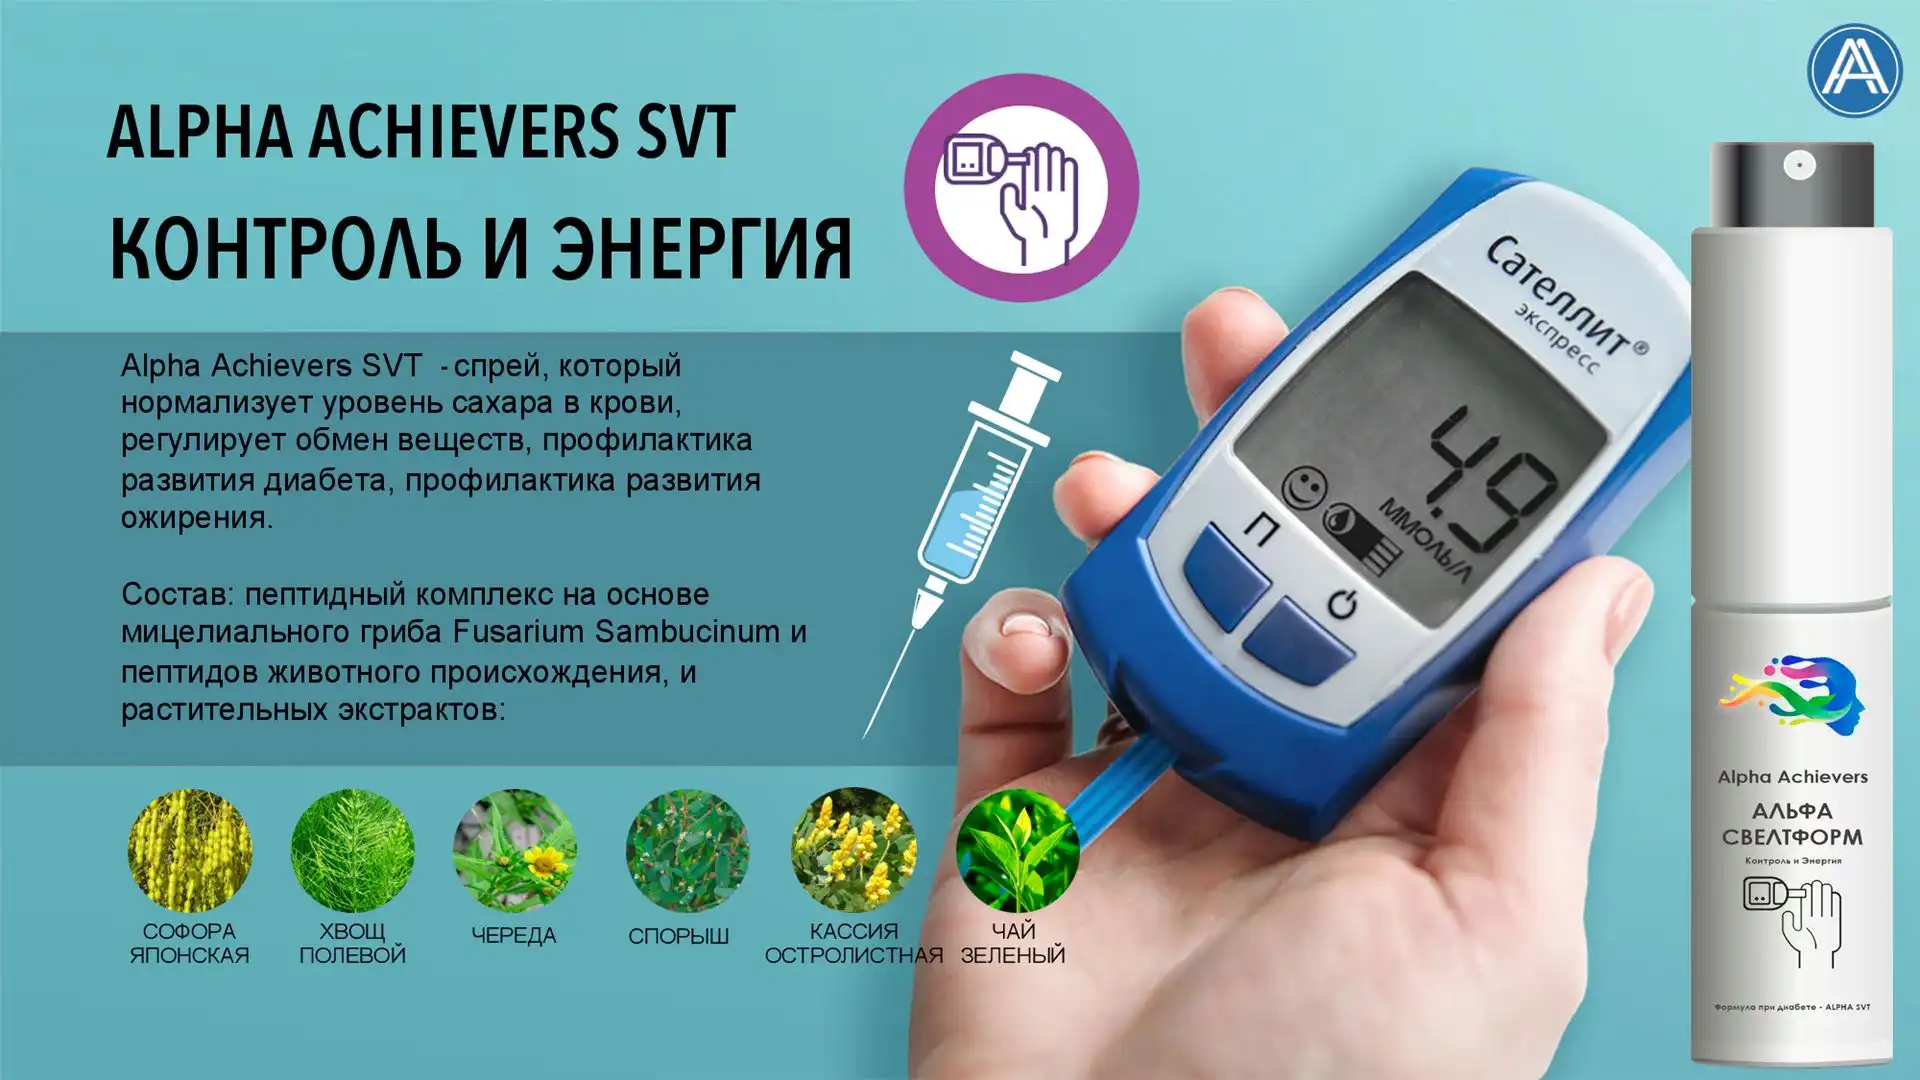 Alpha Achievers SVT- Профилактика развития Диабета